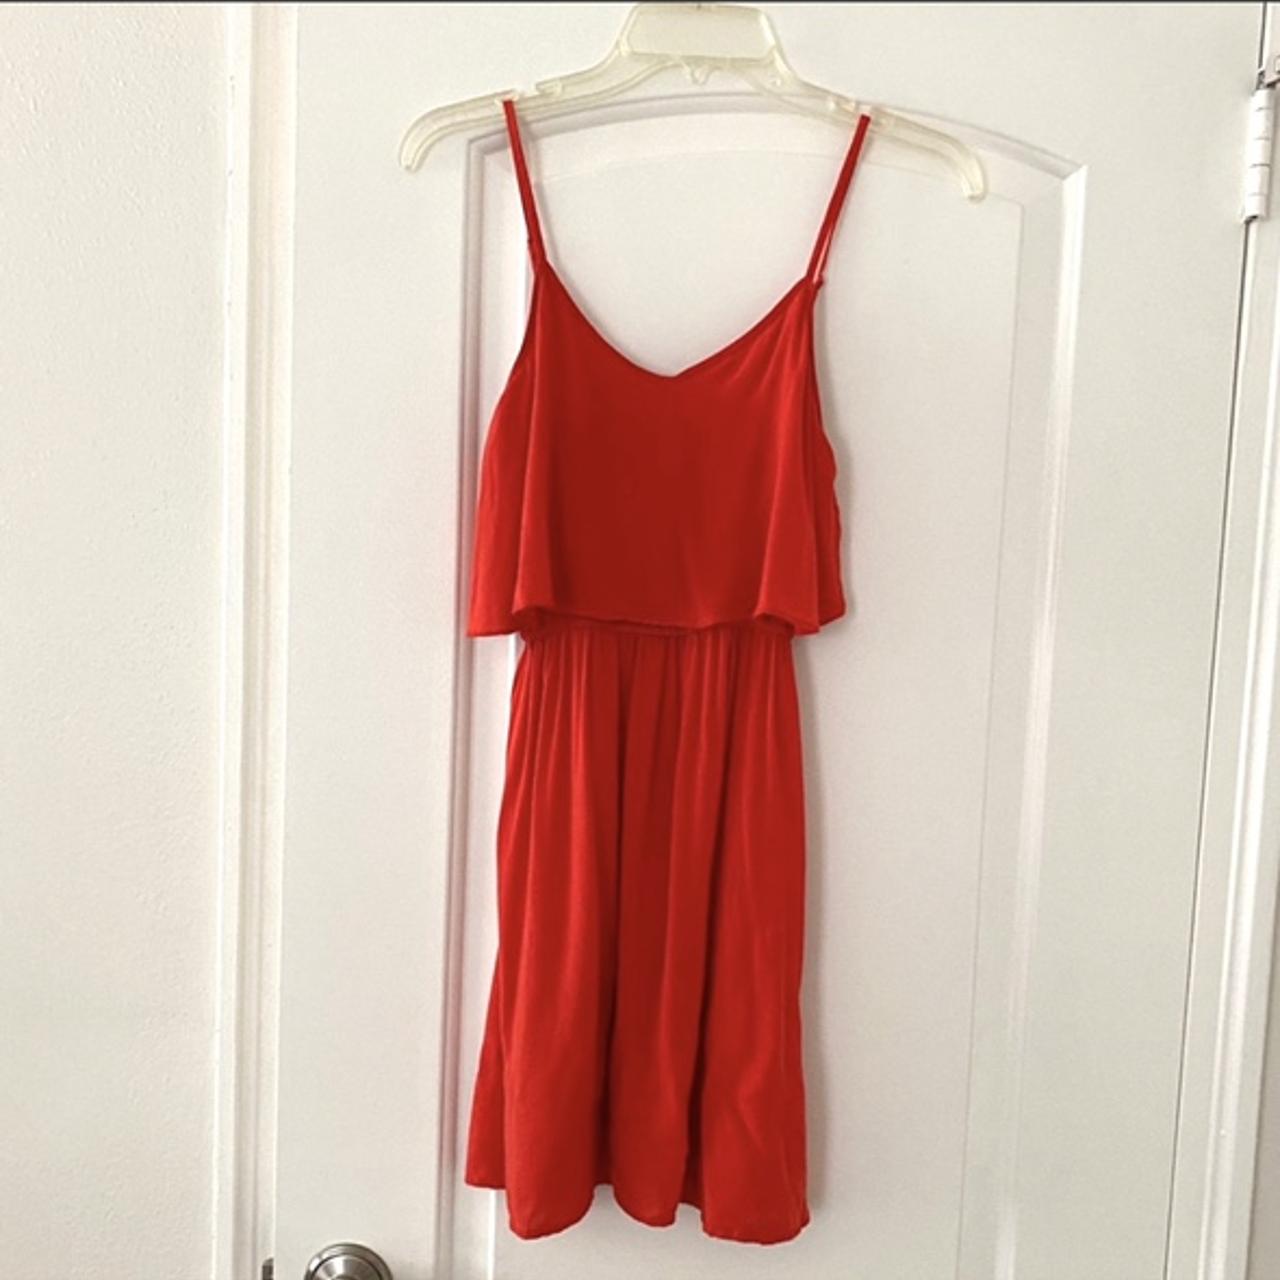 Product Image 2 - Red flowy mini dress. Adjustable